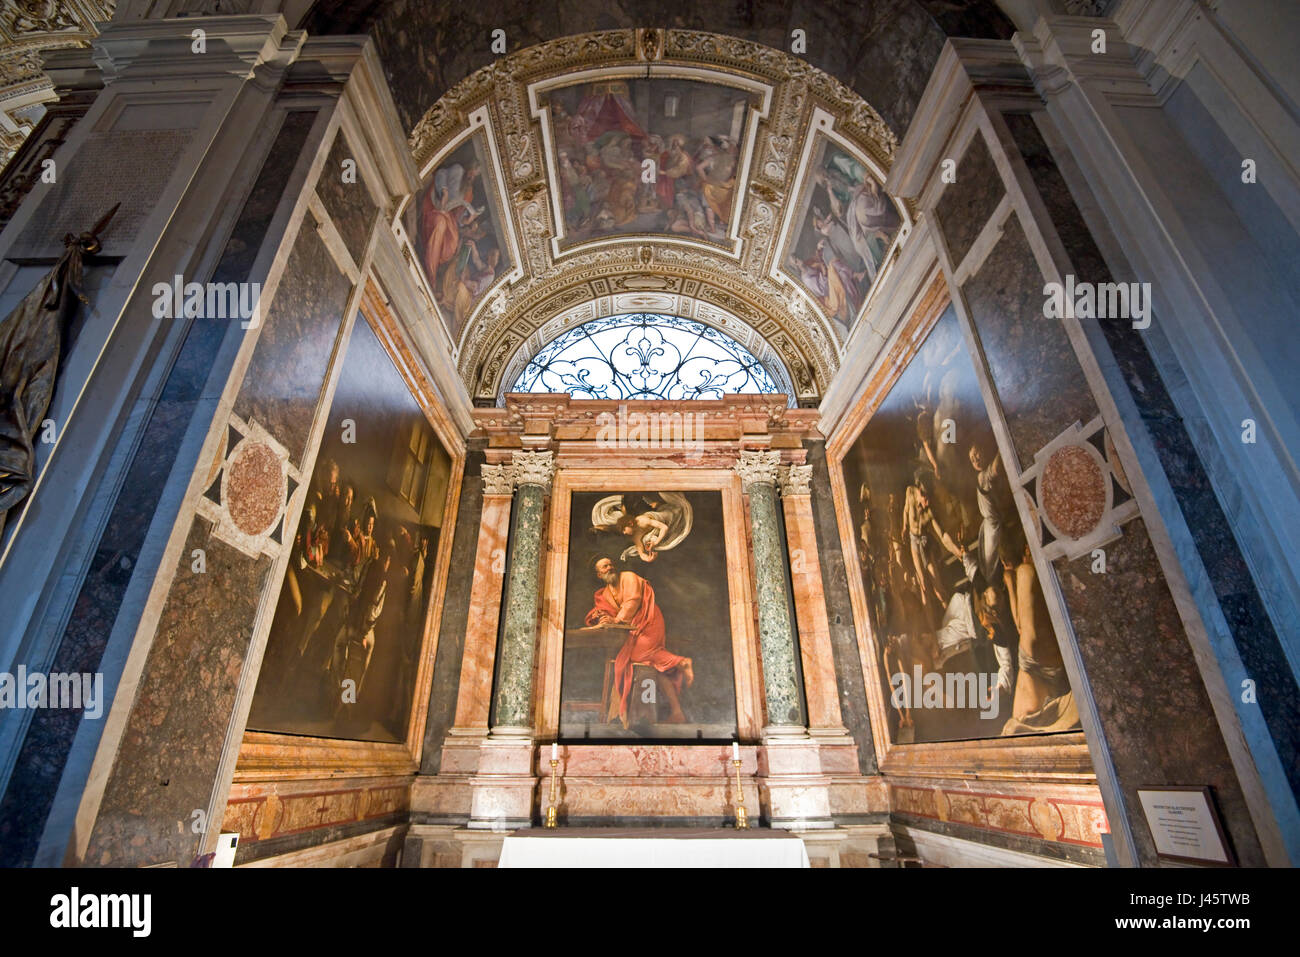 Paintings by Caravaggio in the San Luigi dei Francesi church in Rome. Stock Photo